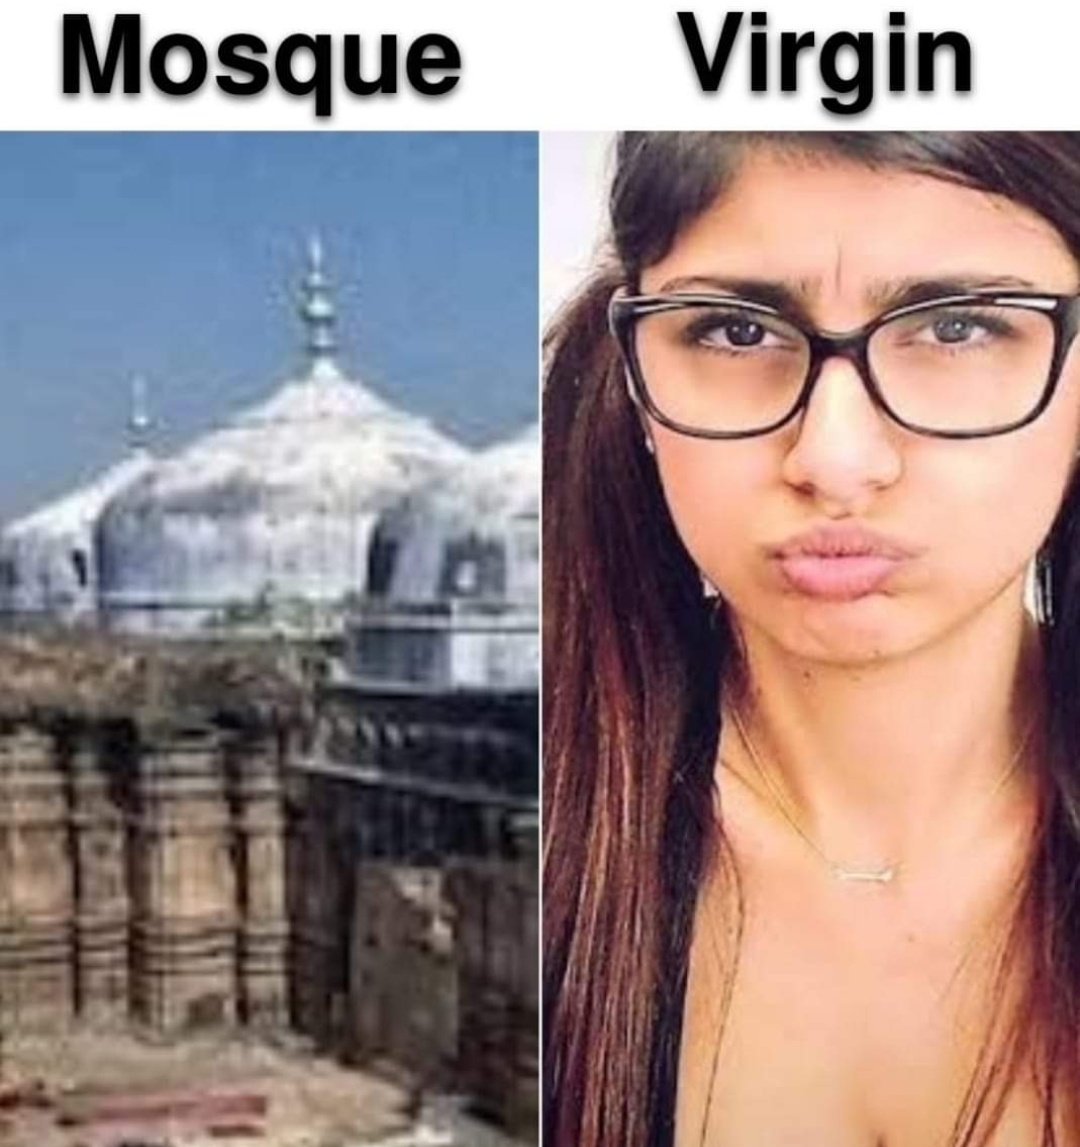 If you consider Gyan wapi Mandir as a mosque then you have no other choice but to consider Mia Khalifa a virgin farmer 😂